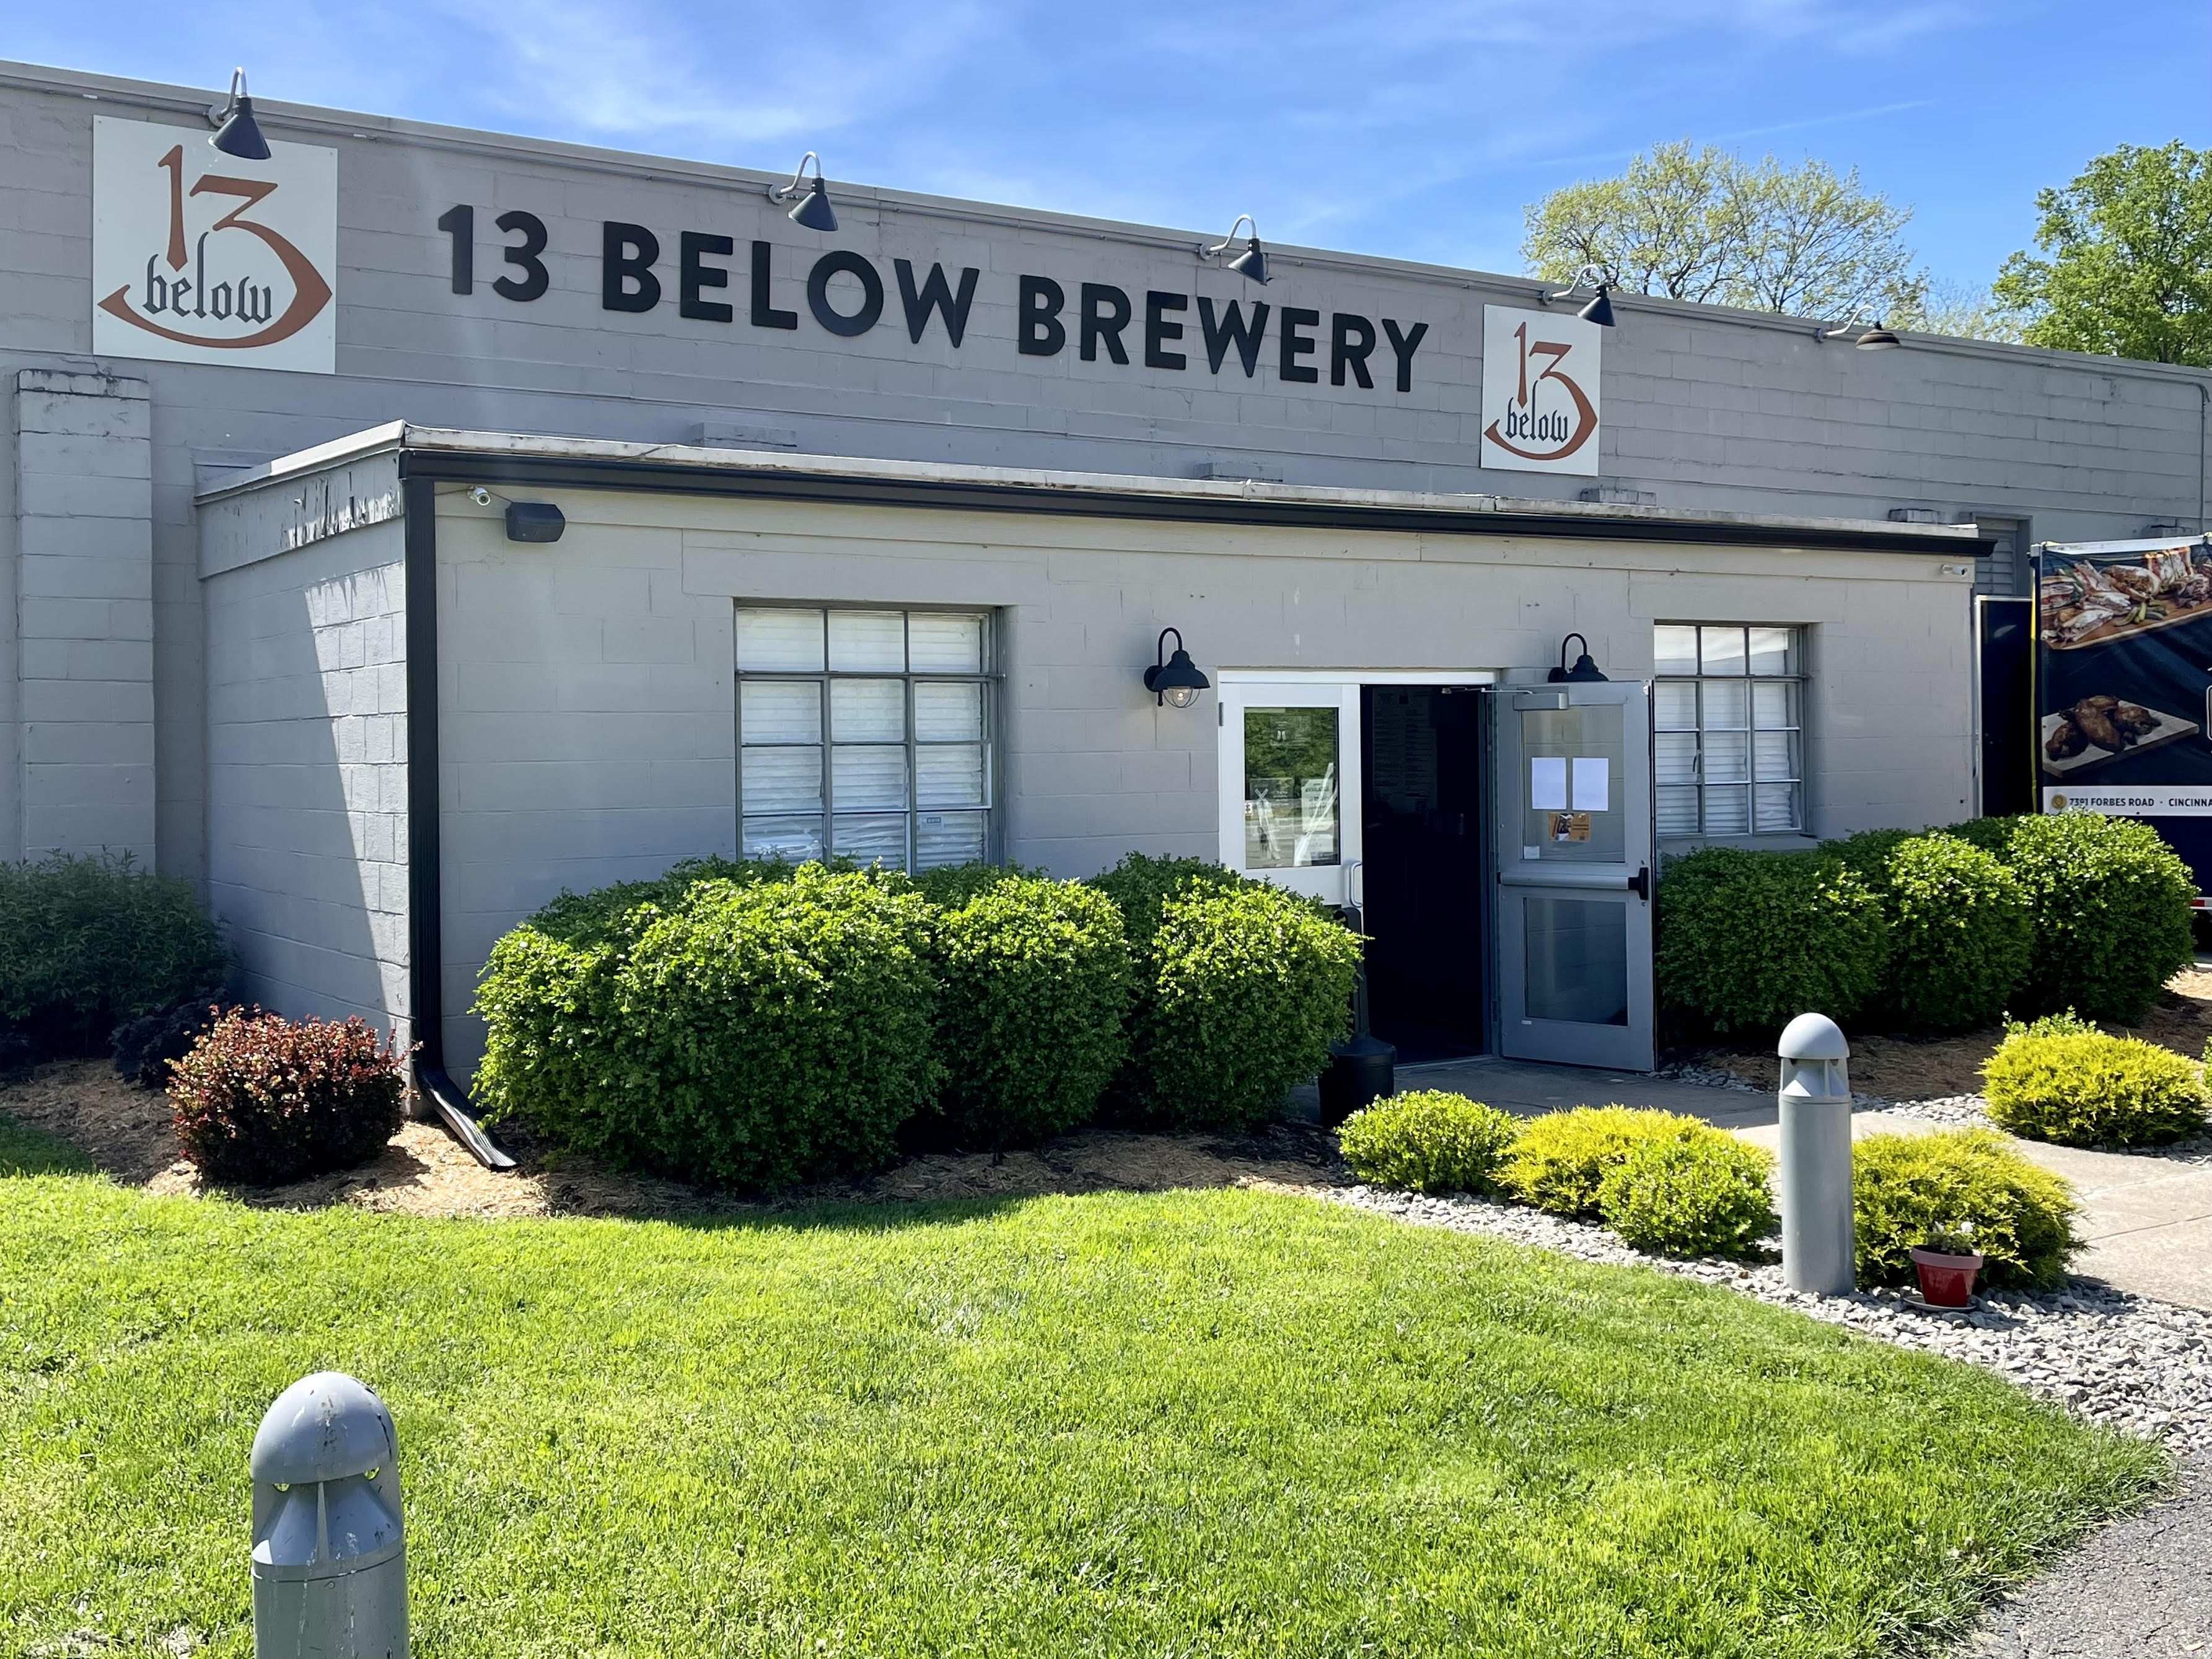 13 Below Brewery entrance